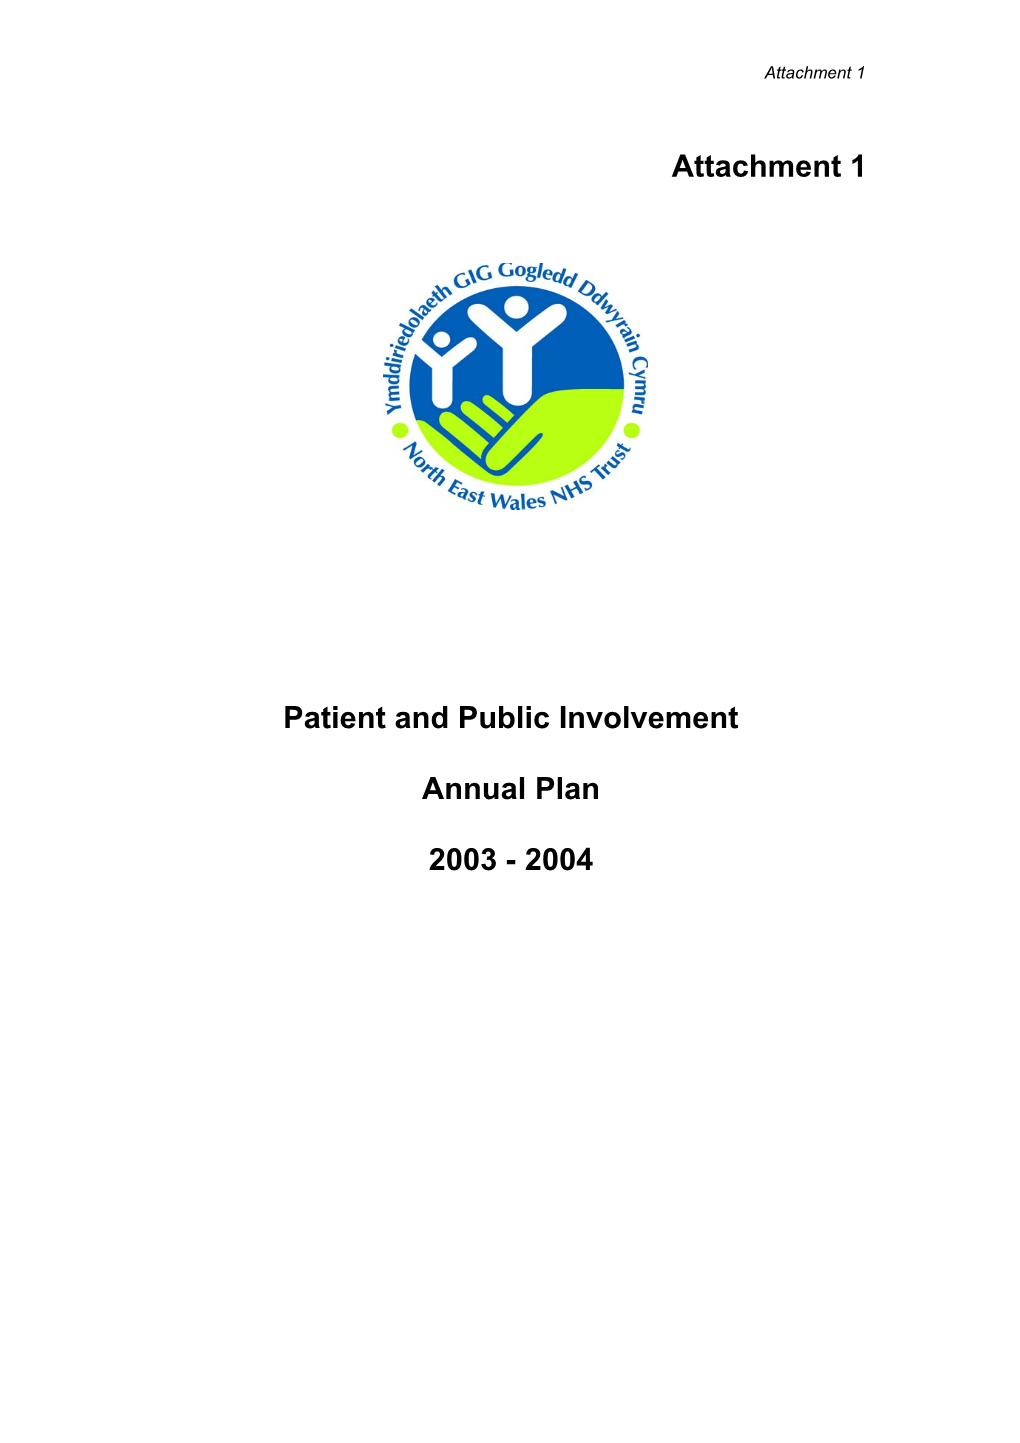 Patient and Public Involvement